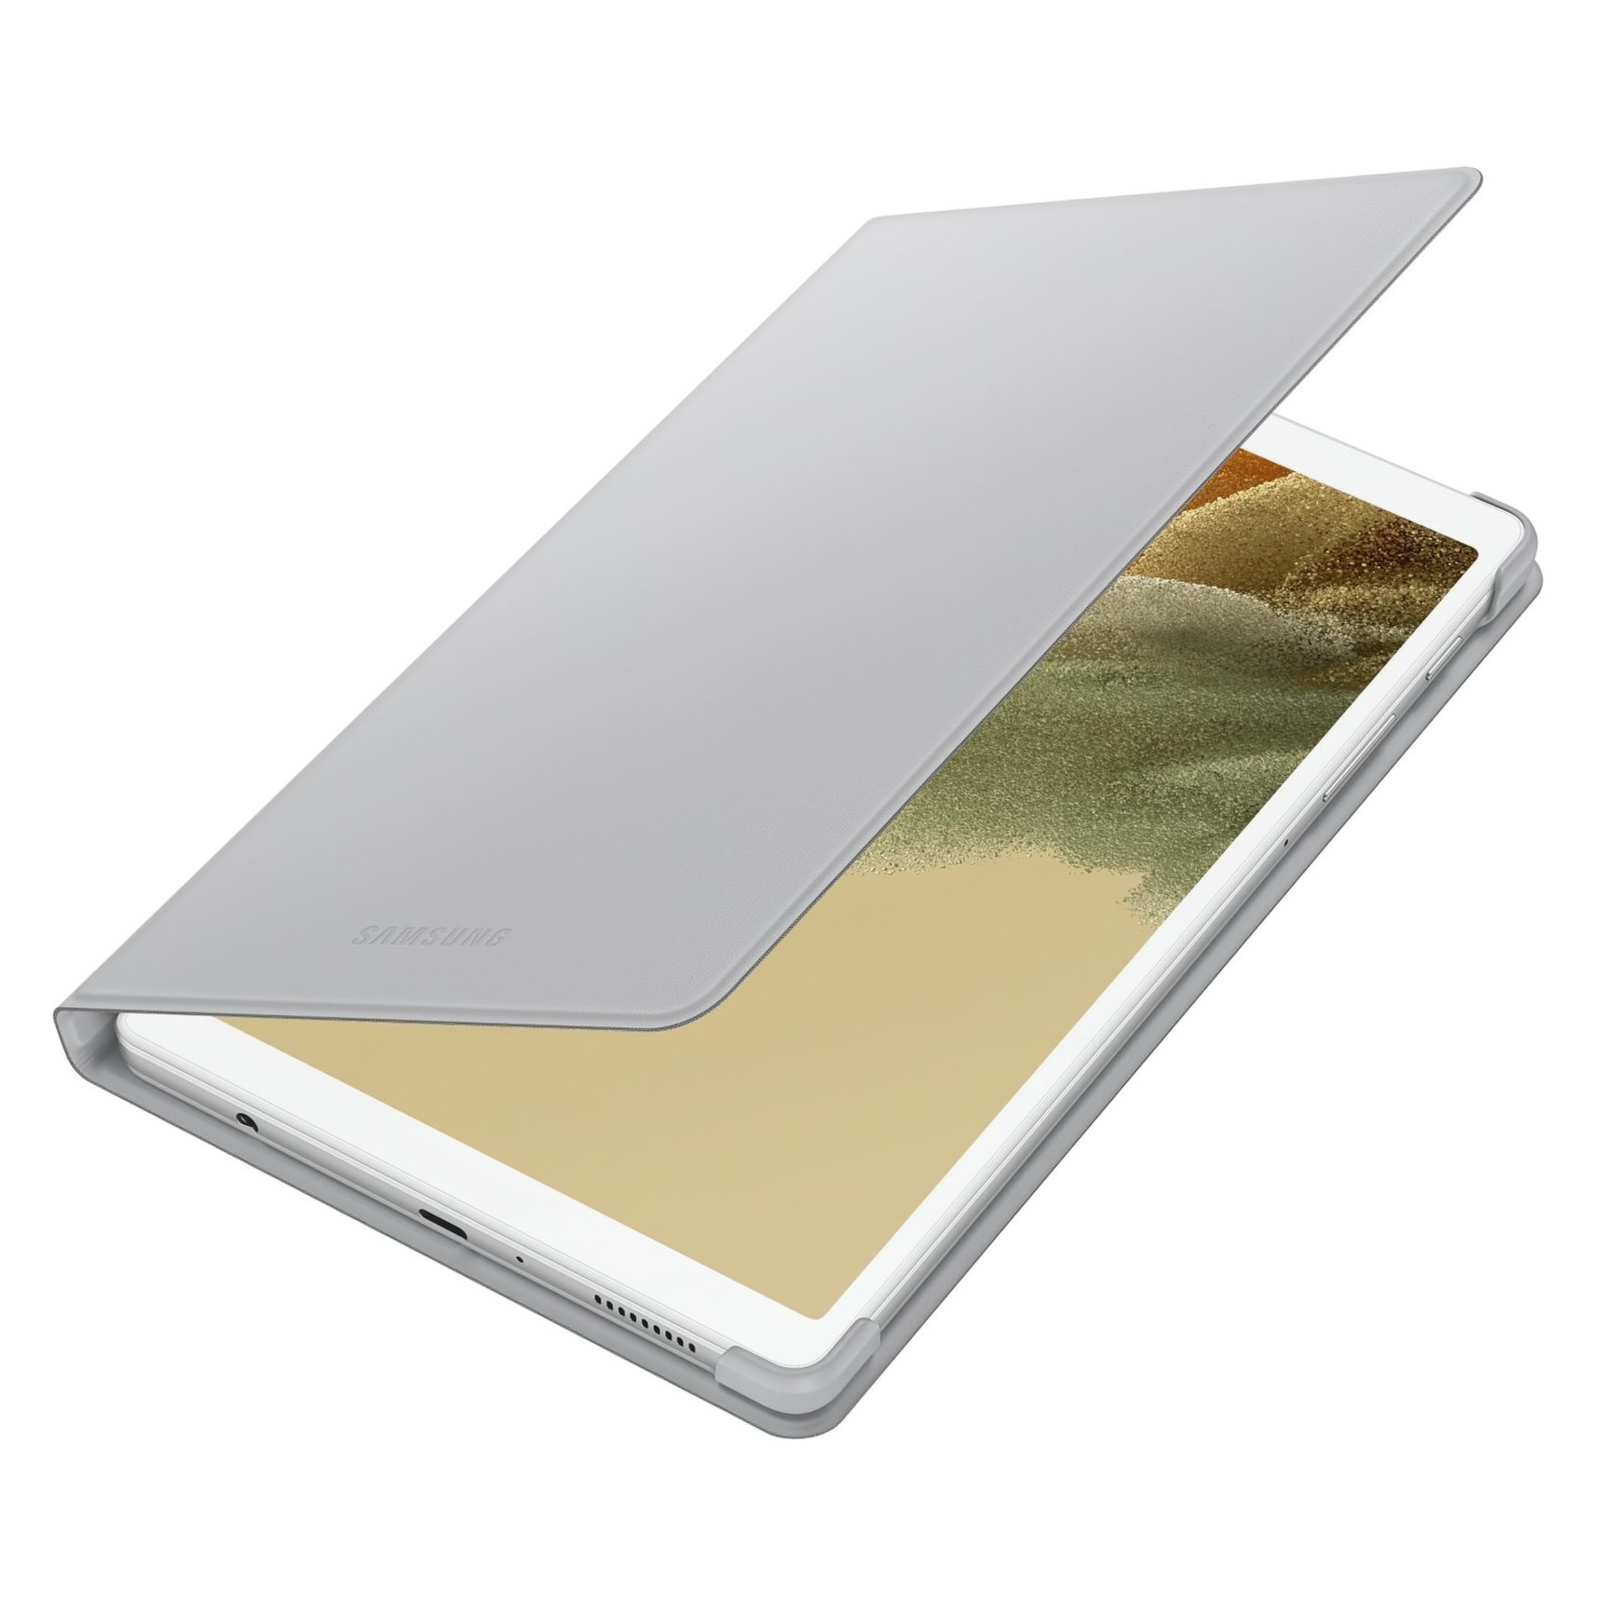 Чехол для планшета Samsung Tab A7 Lite Book Cover Silver (EF-BT220PSEGRU) изображение 6